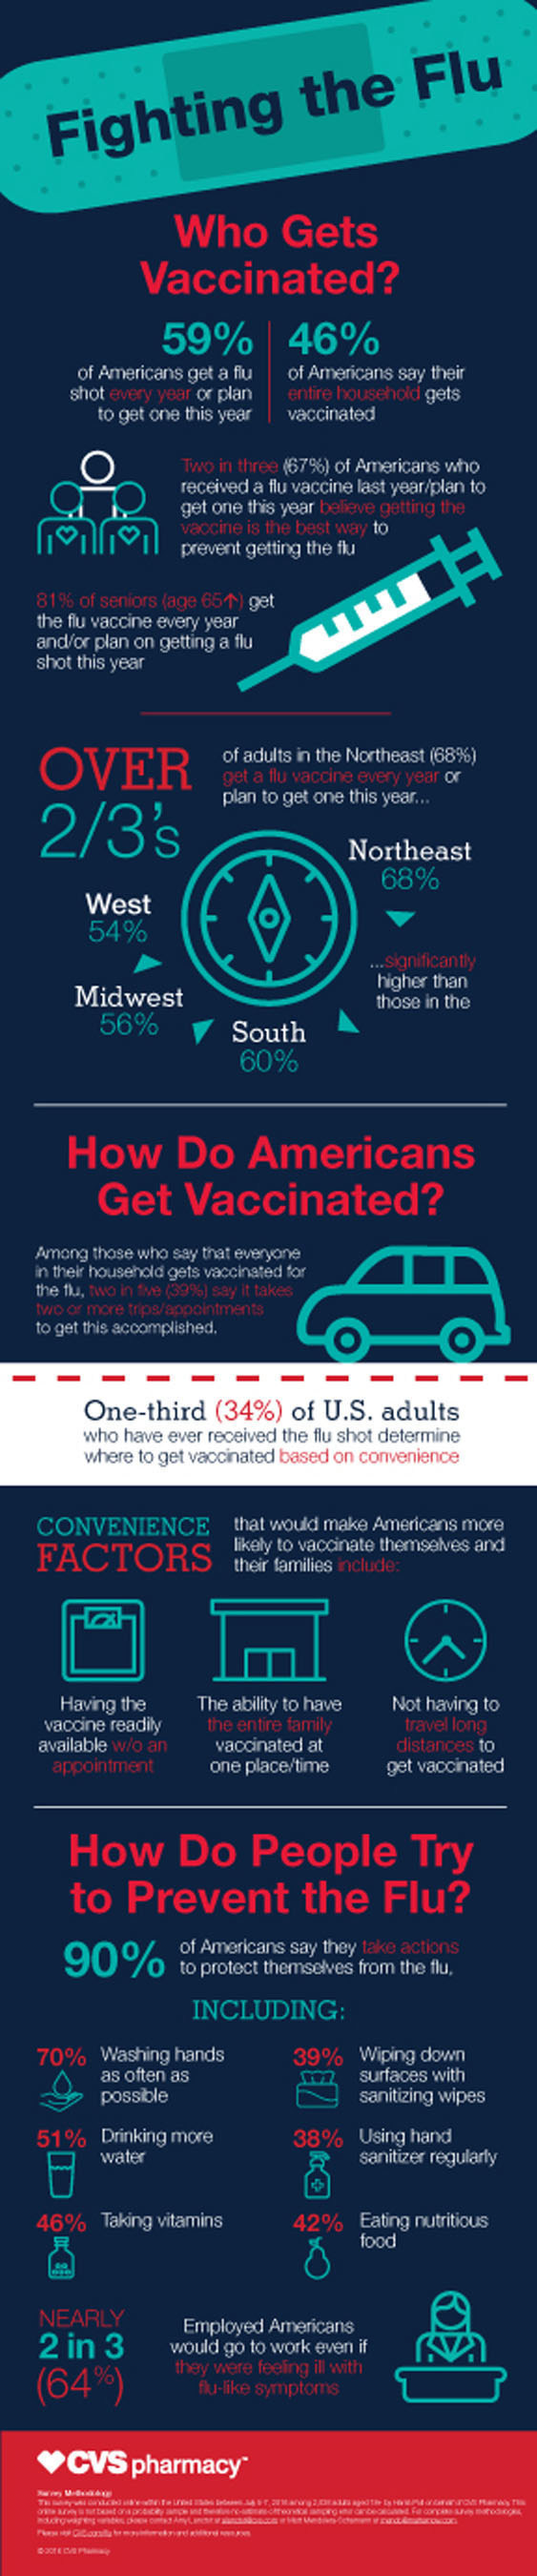 CVS Pharmacy 2016 Flu Survey Infographic